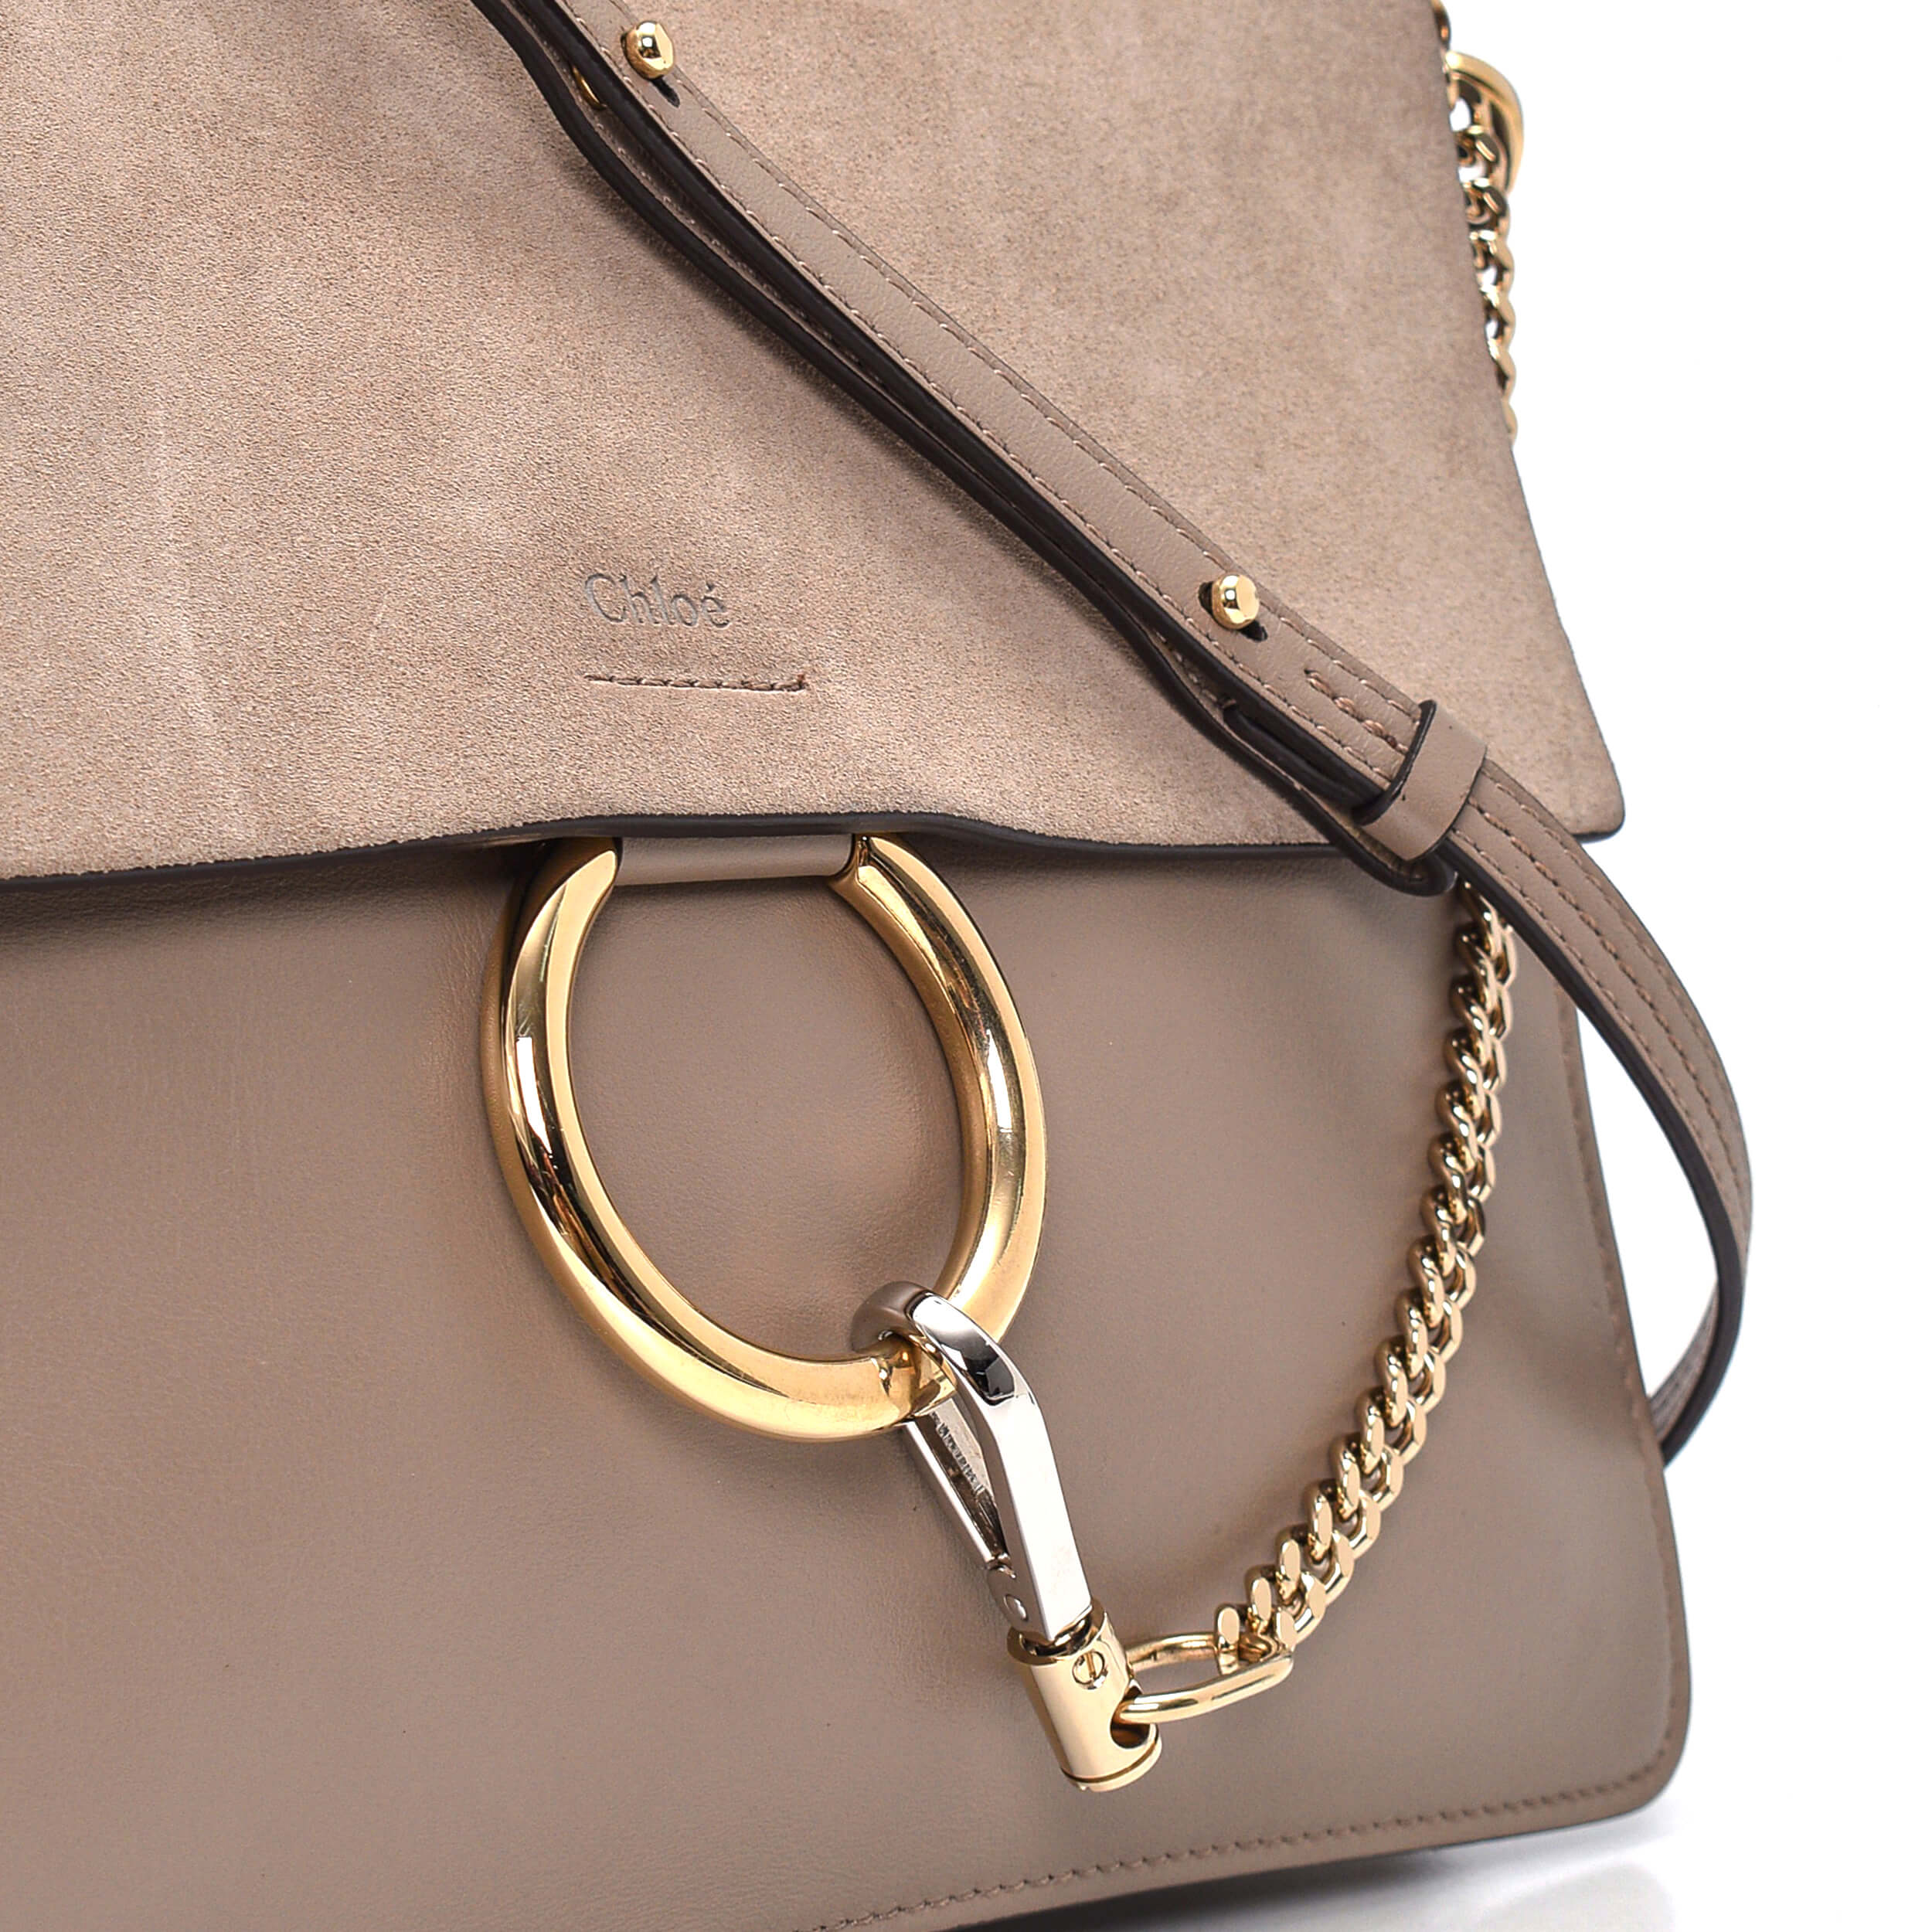 Chloe - Beige Leather Medium Faye Shoulder Bag